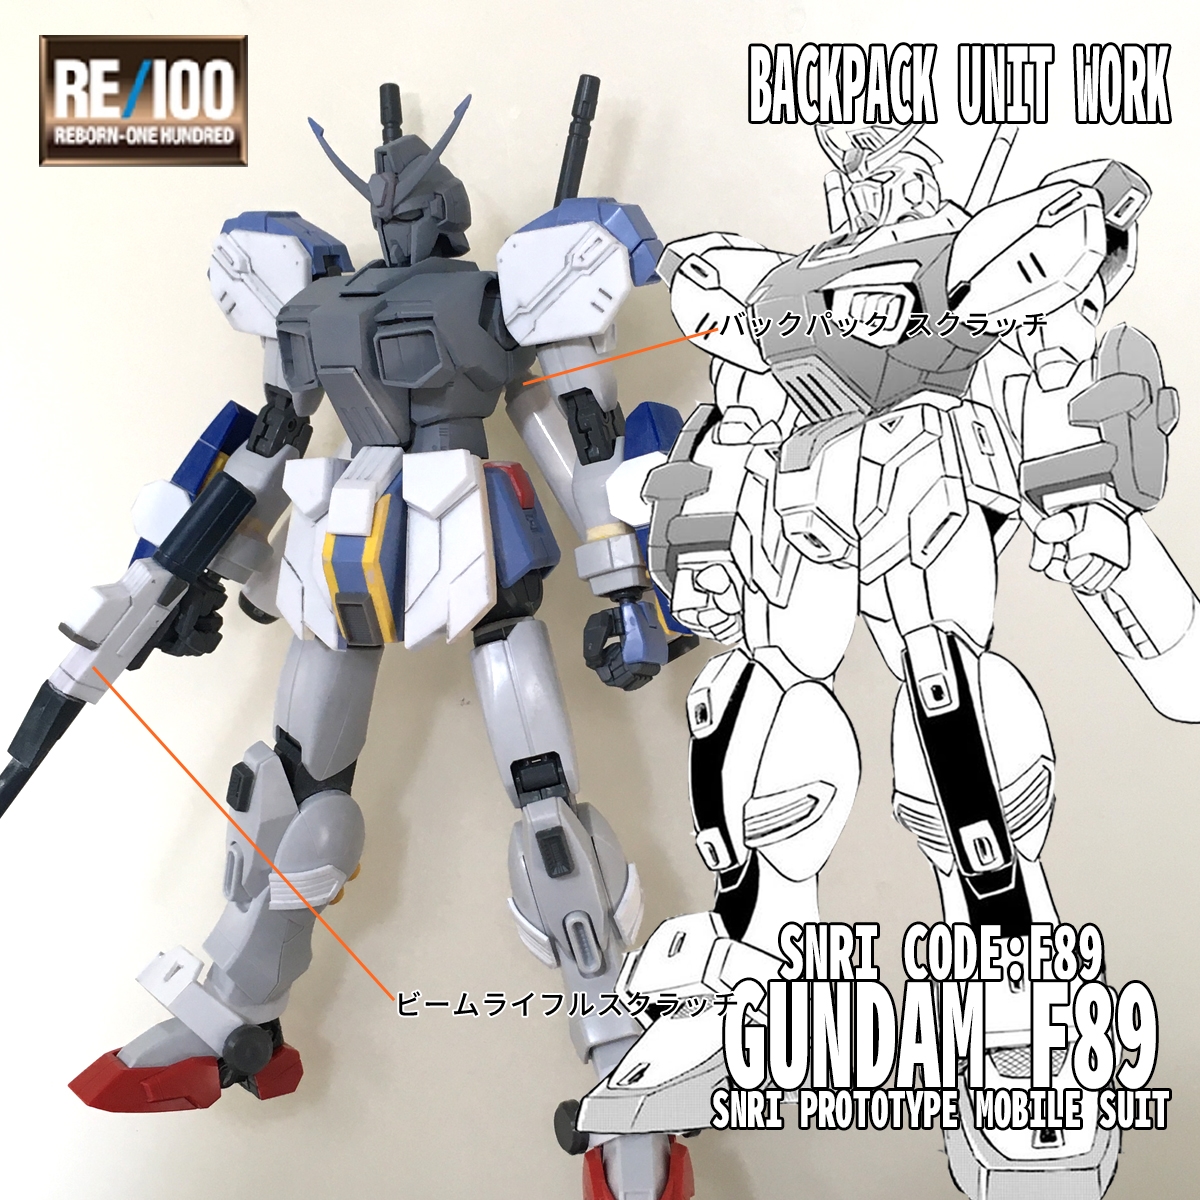 RE/100 ガンダムMk-III → RE/100 ガンダムF89 バックパック改造編